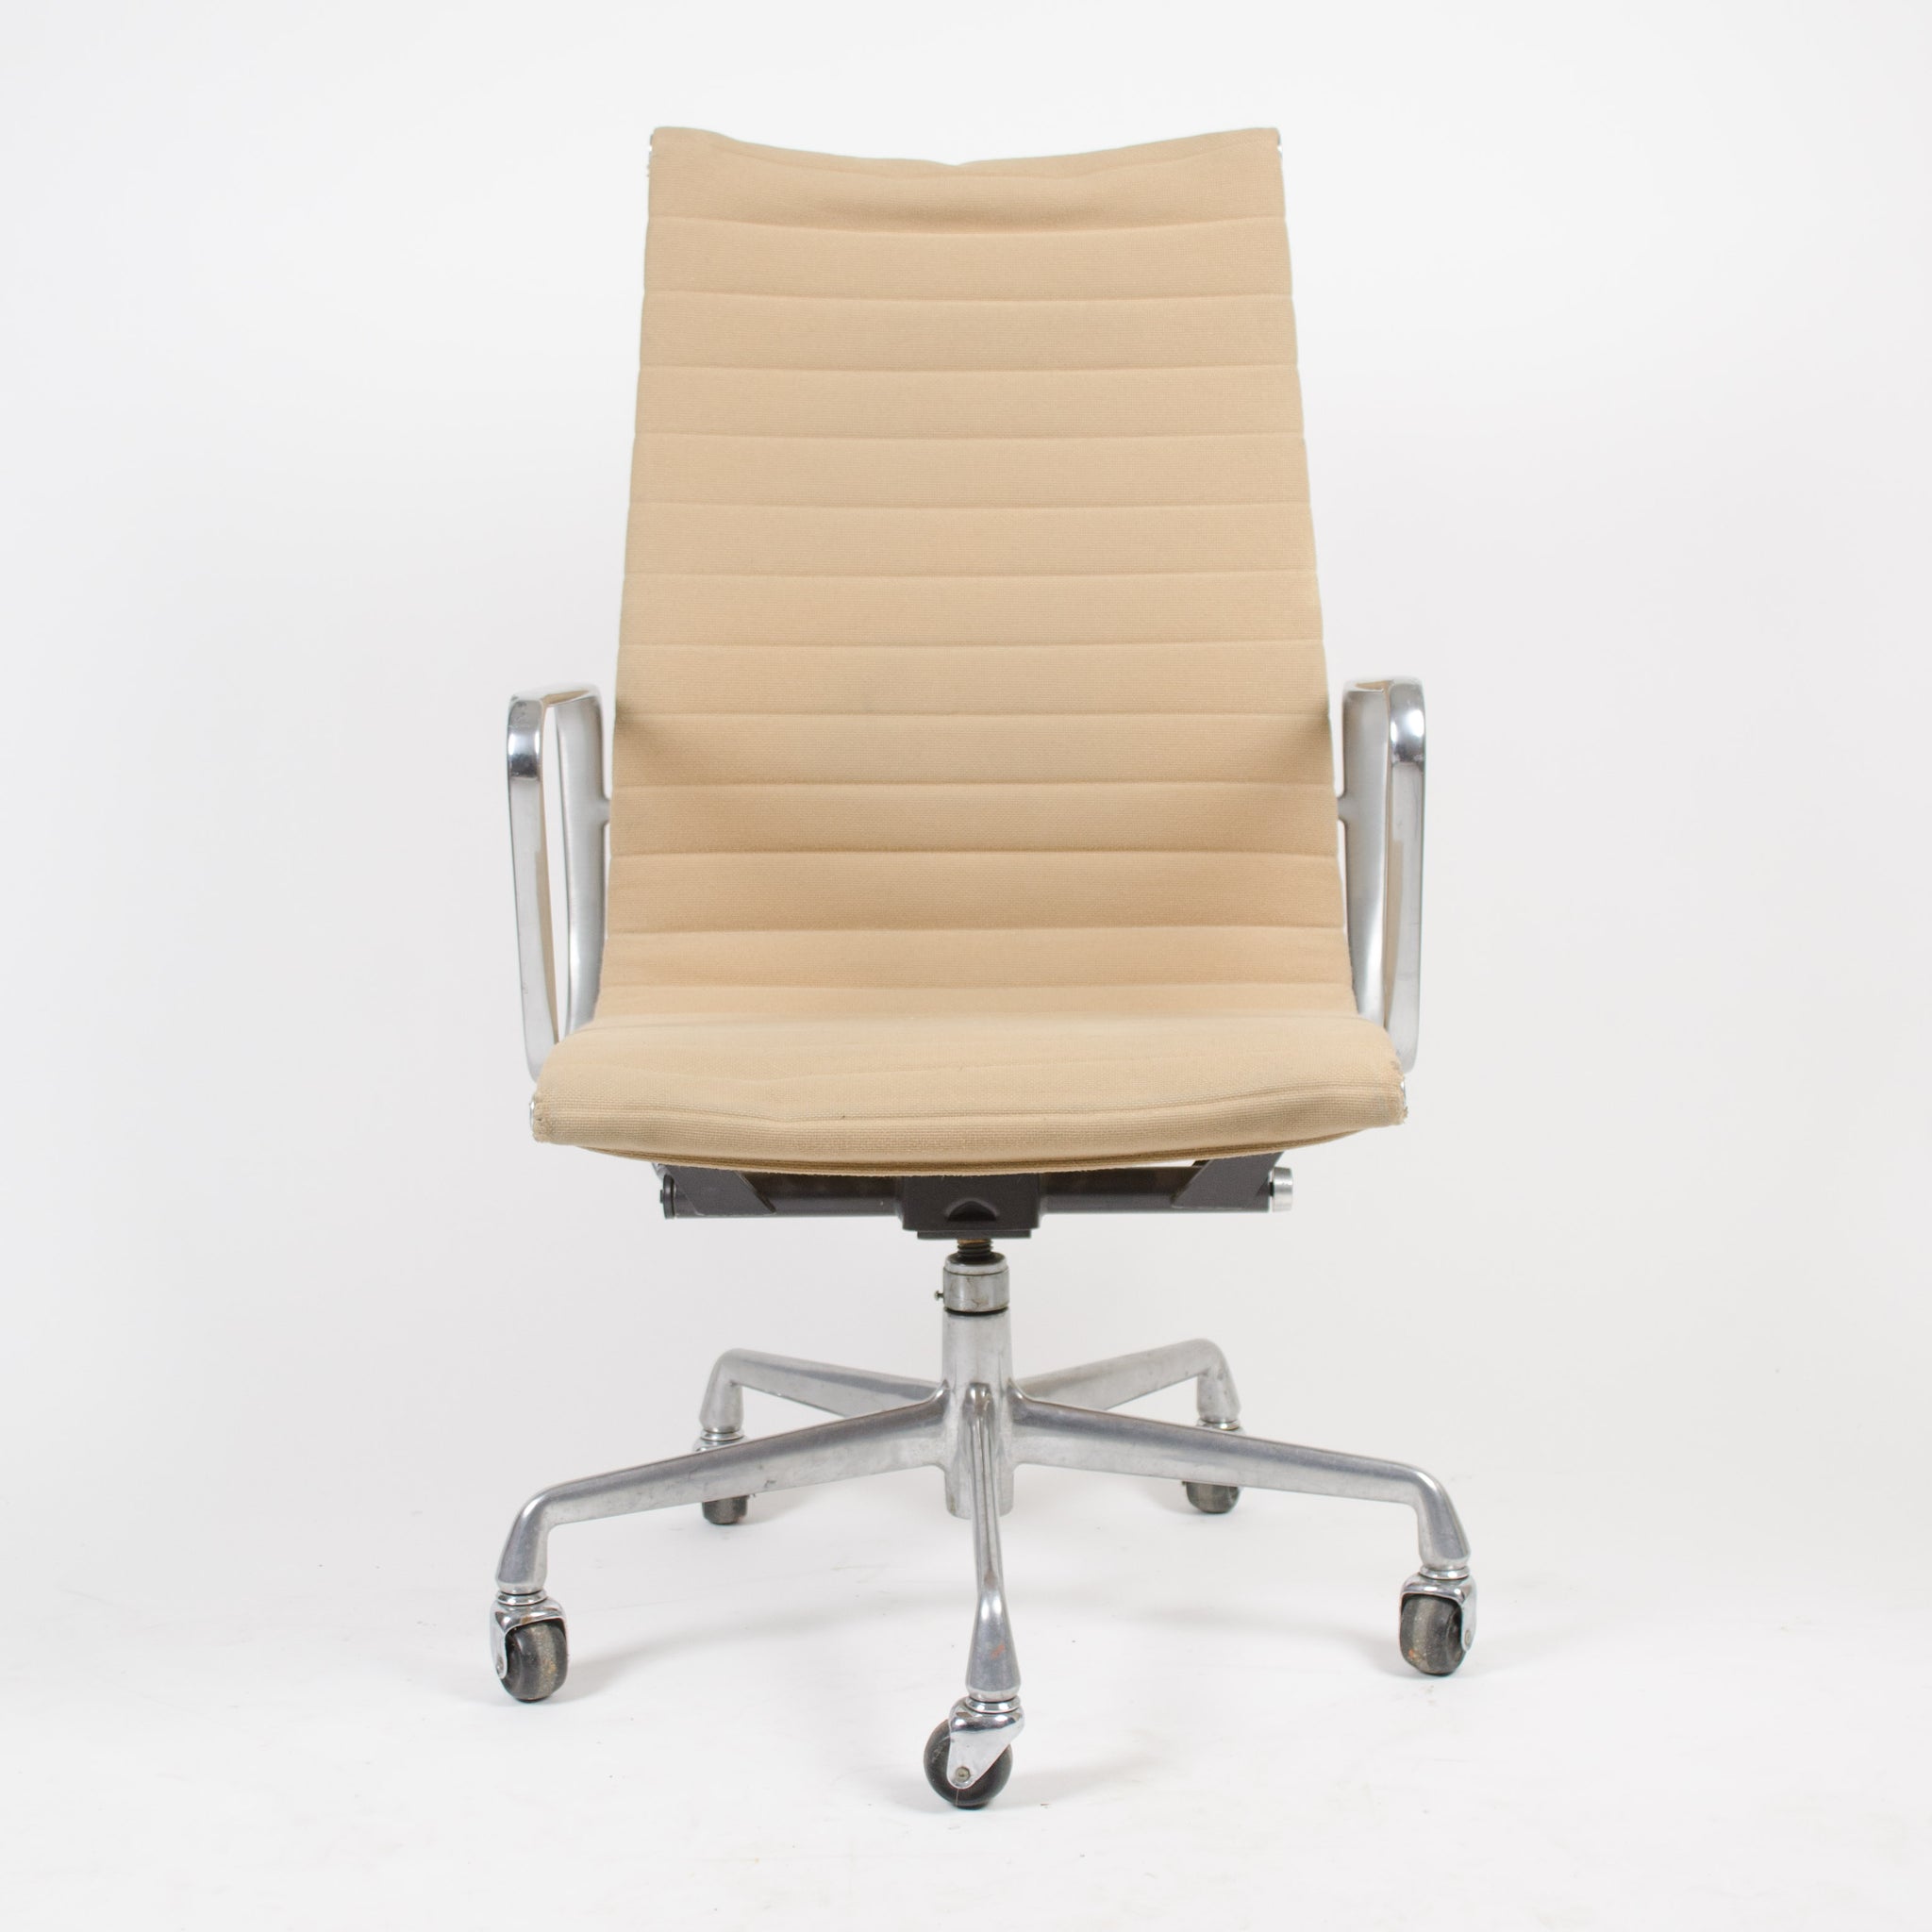 SOLD Herman Miller Eames Aluminum Group High Back Desk Chair Tan Hopsack 90's